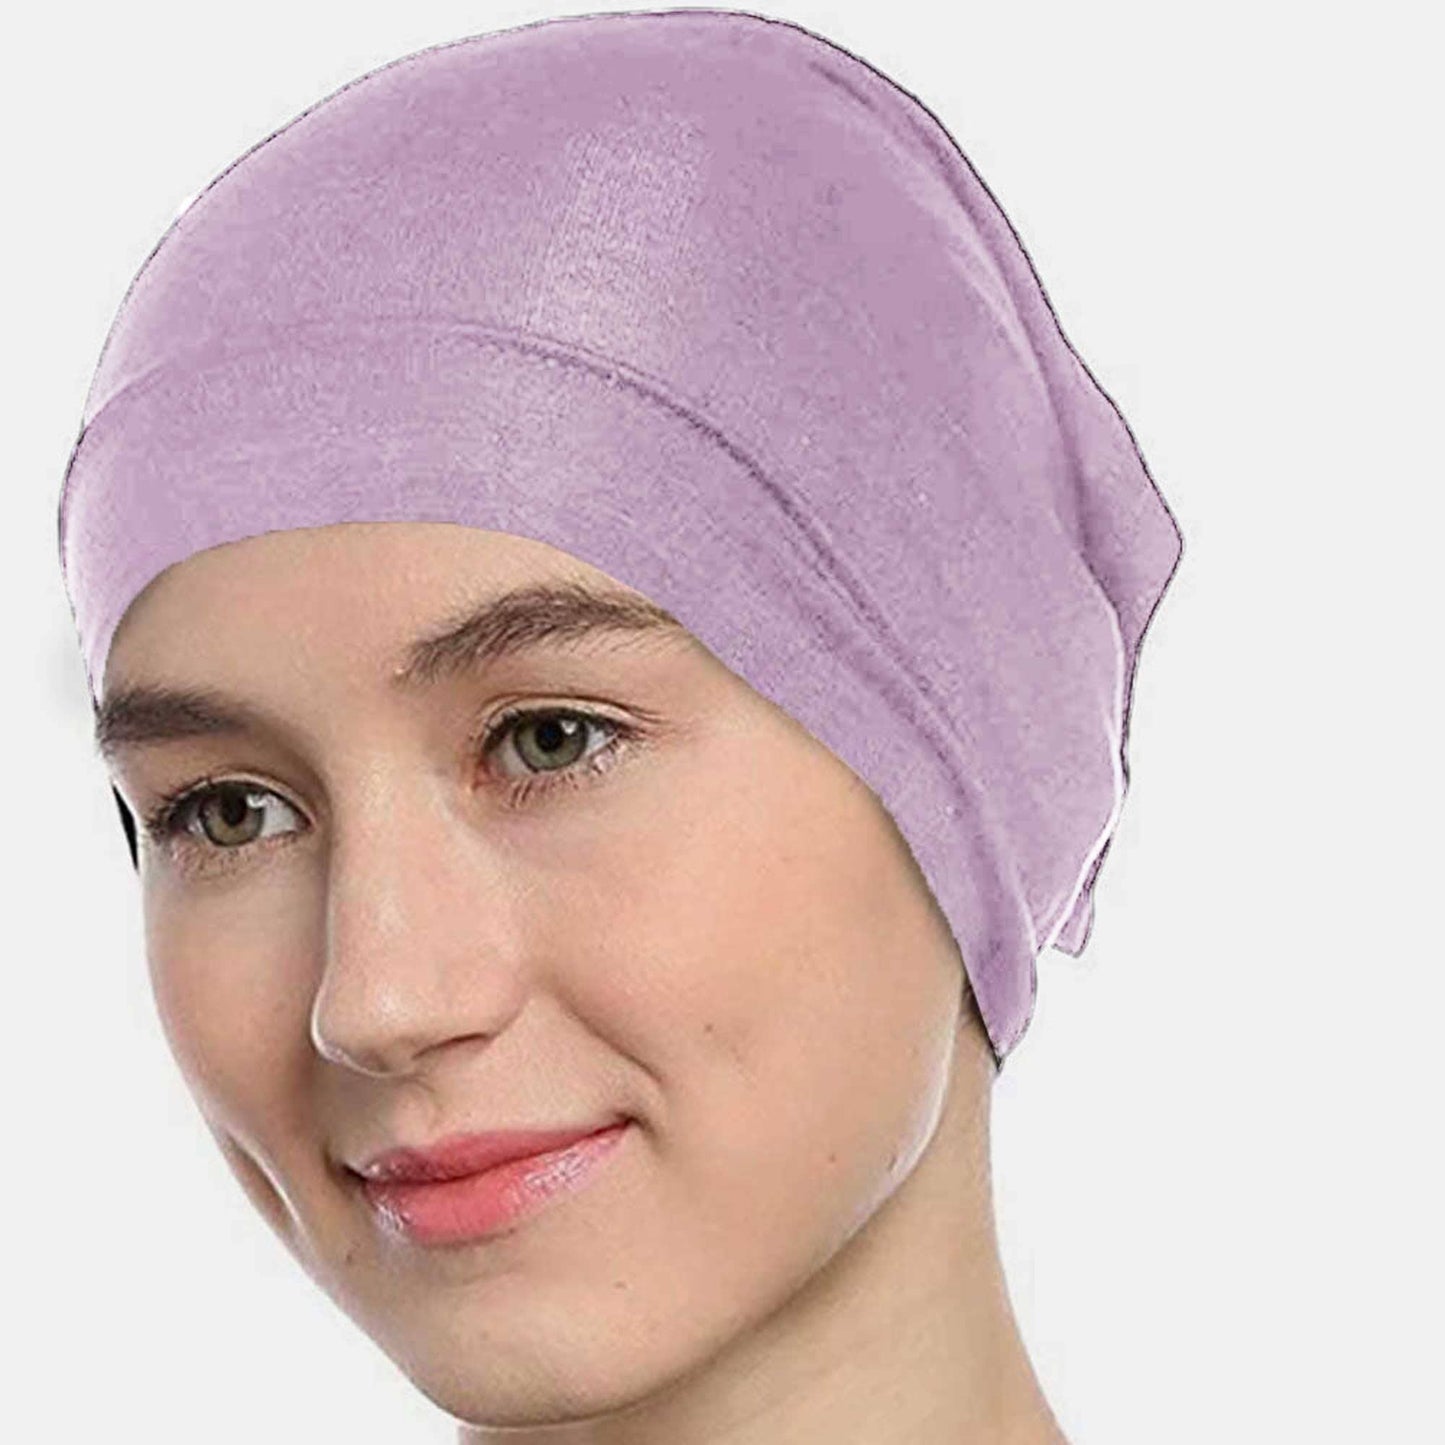 Women's Under Scarf Hijab Cap Women's Accessories De Artistic Powder Pink 